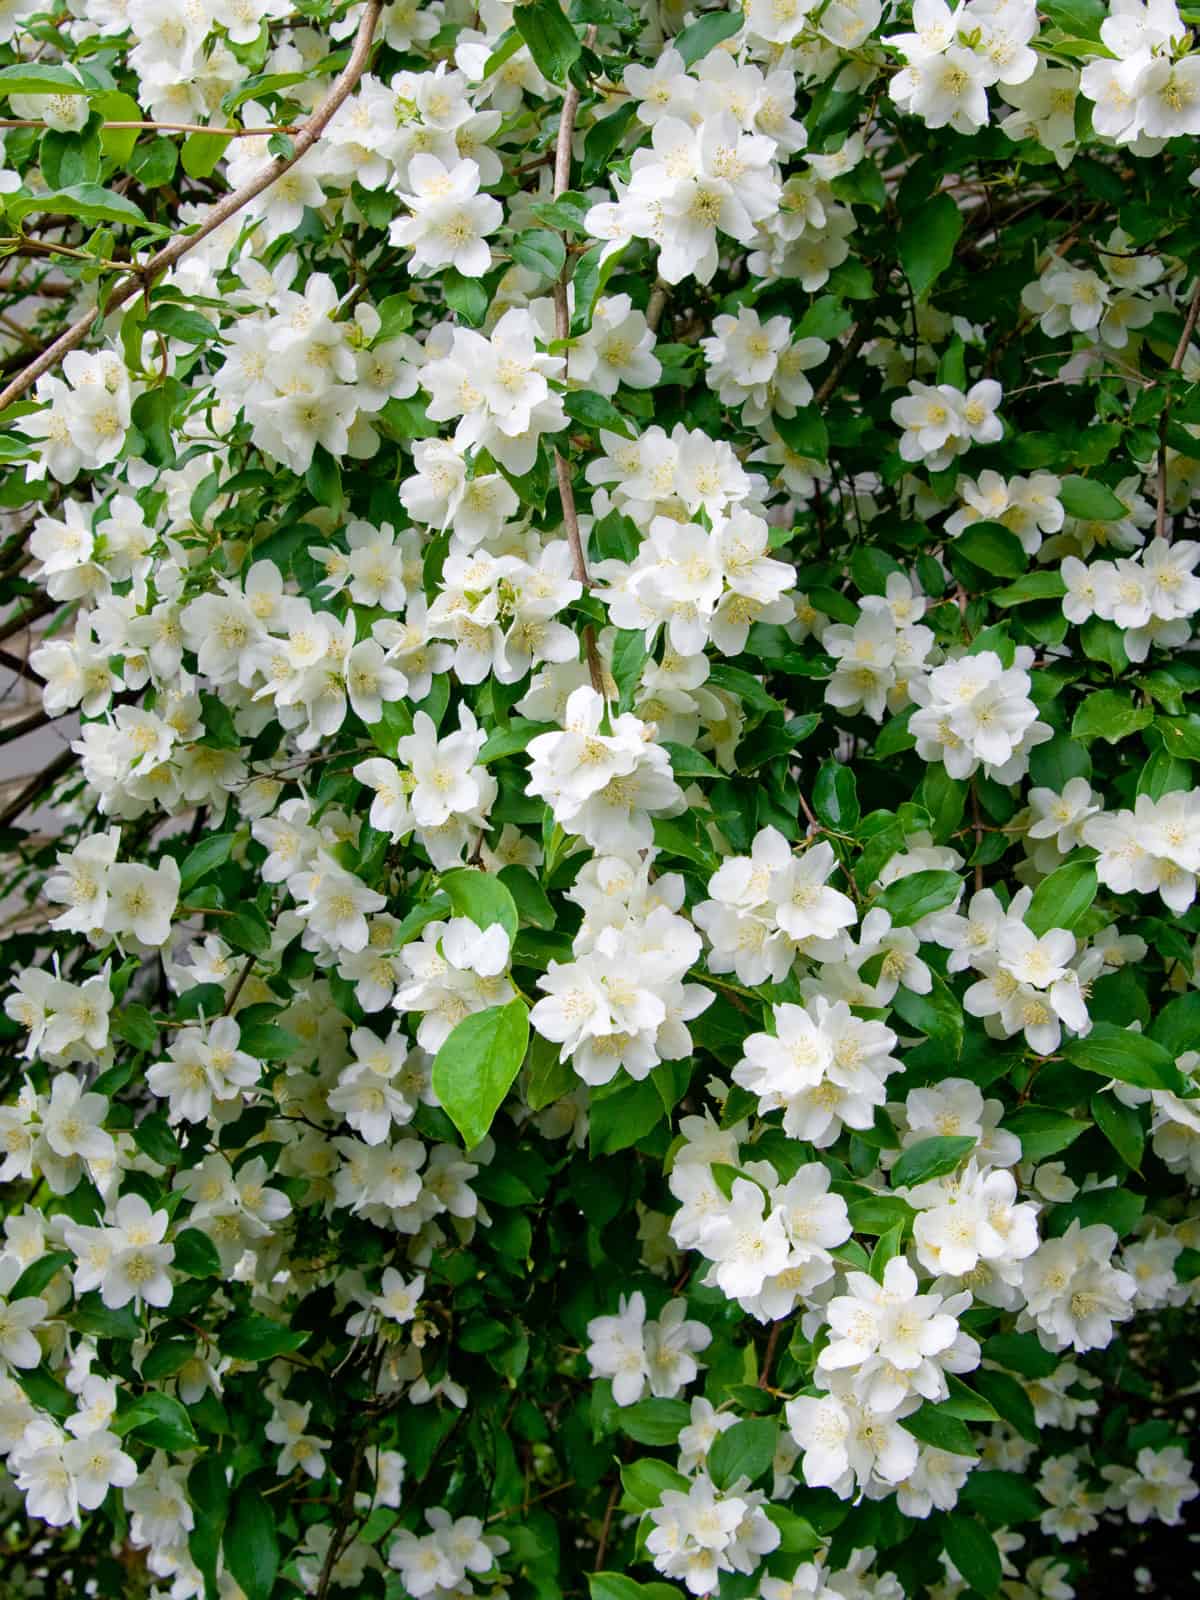 Bright white petals of a Jasmine plant